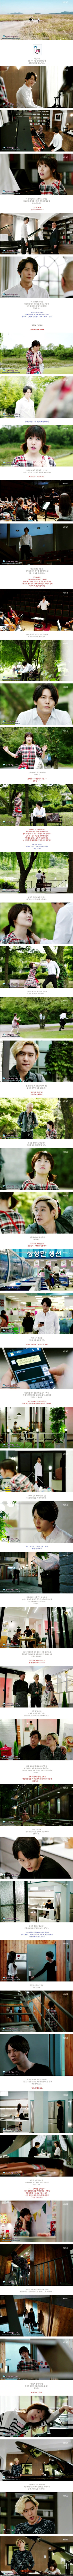 episode 2 captures for the Korean drama 'Tomorrow's Cantabile'